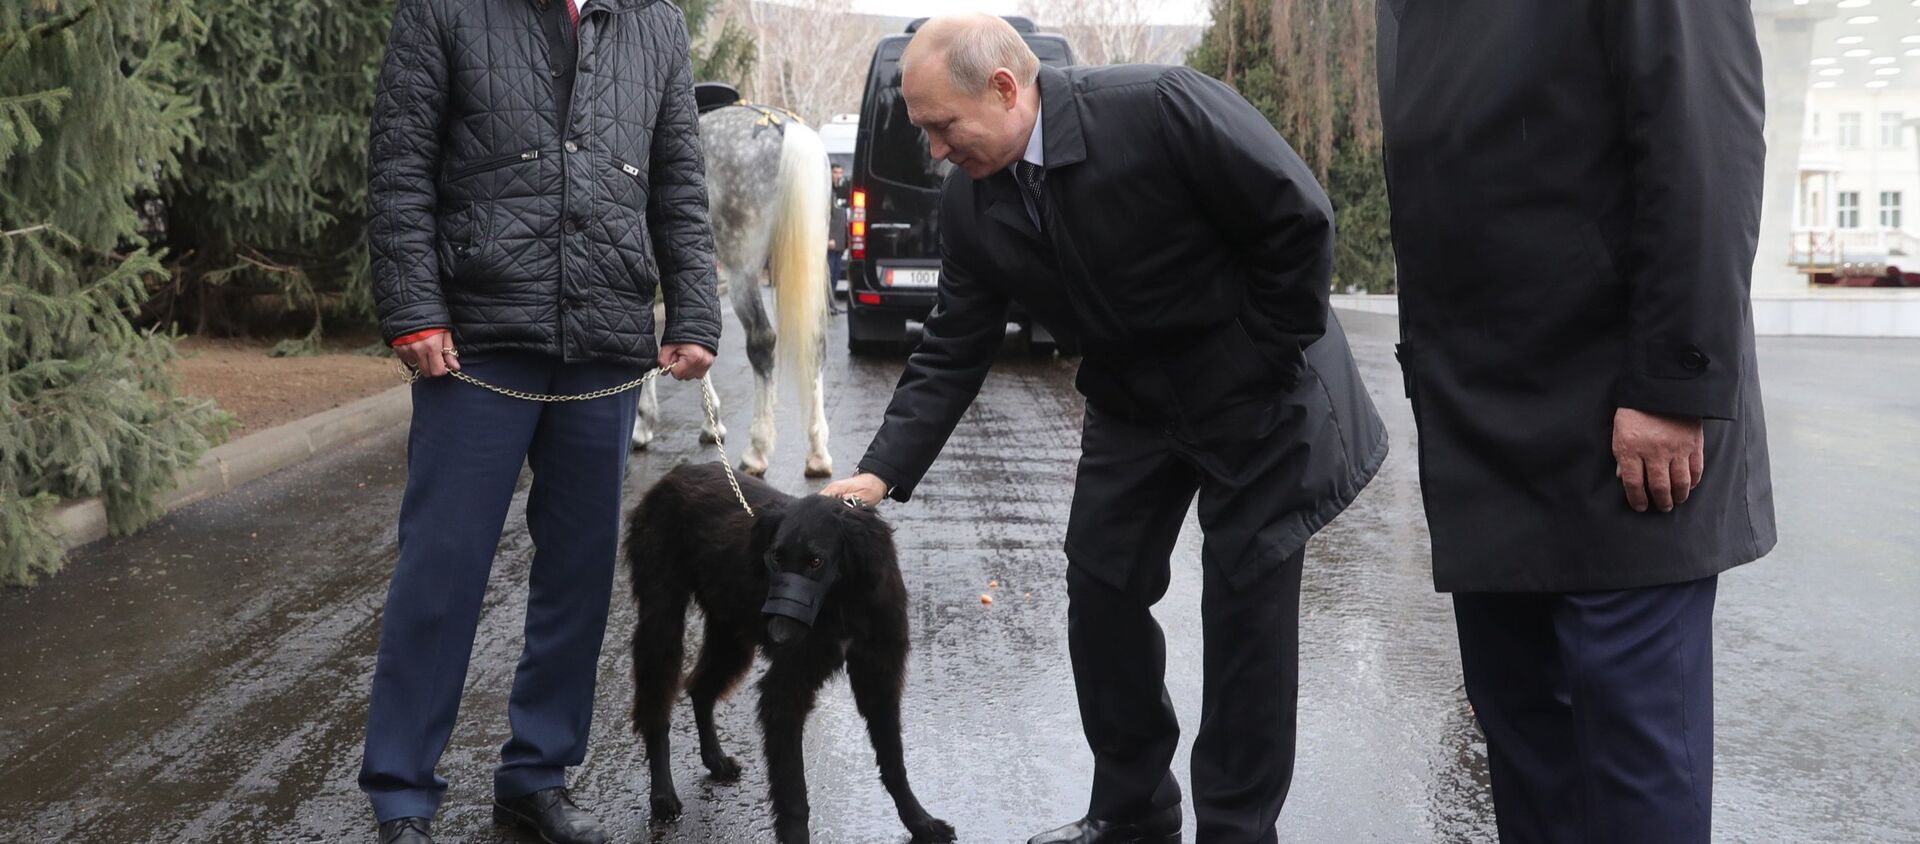 El presidente kirguís, Sooronbay Jeenbekov, le regala al presidente ruso, Vladímir Putin, un cachorro - Sputnik Mundo, 1920, 29.03.2019